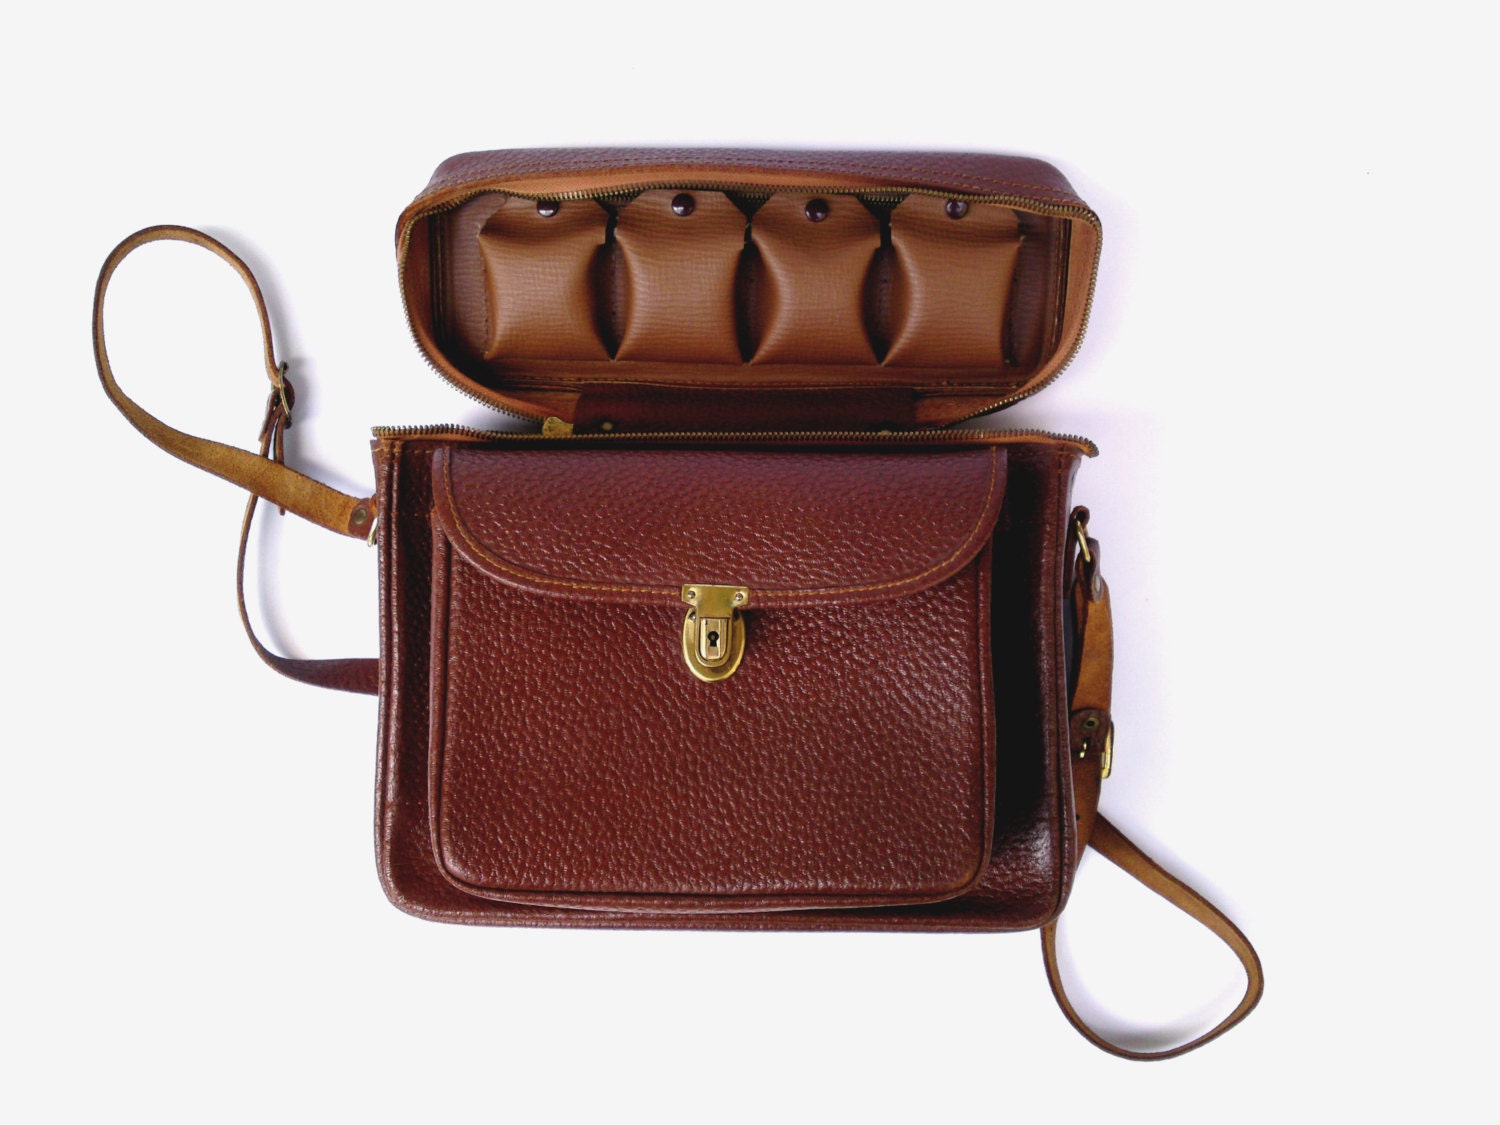 Vintage leather camera bag brown genuine leather purse